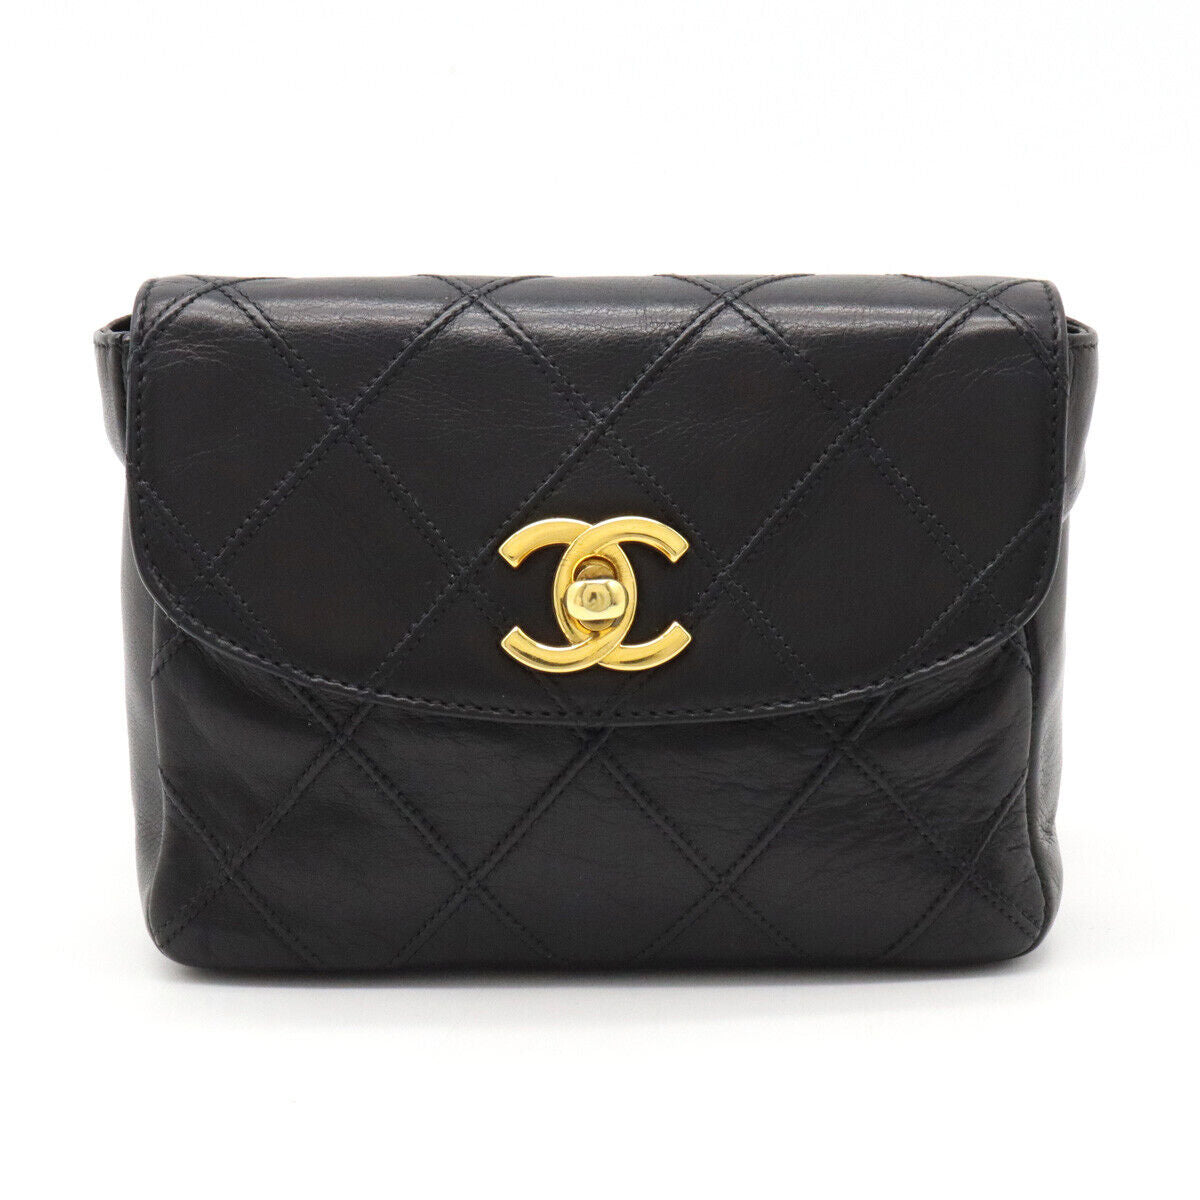 chanel black patent leather tote handbag